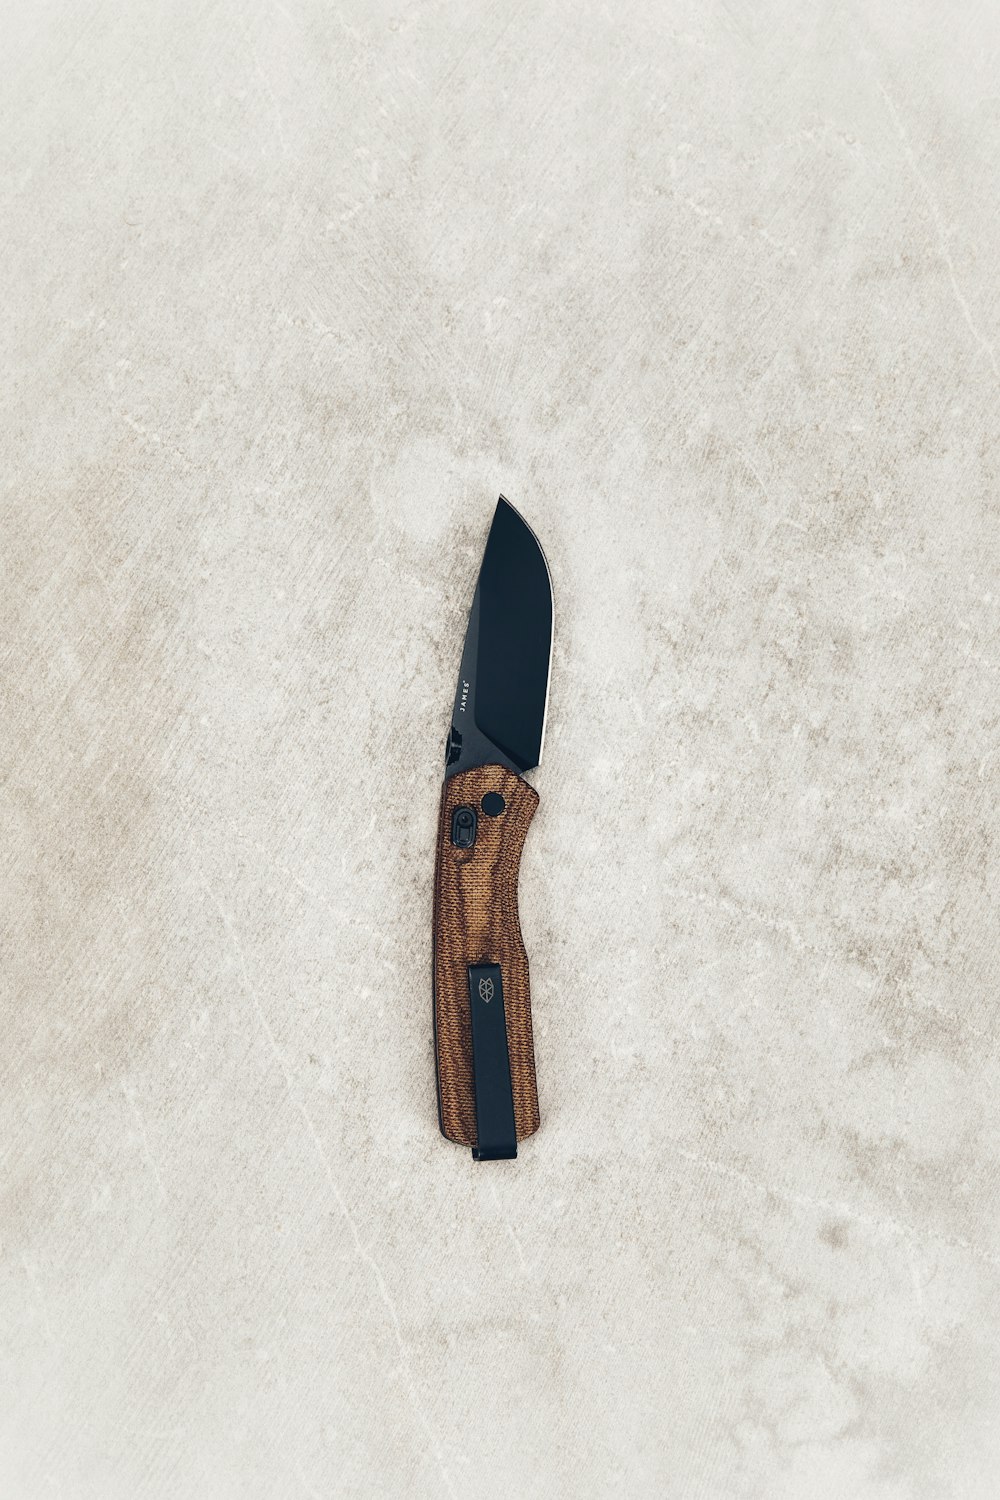 black and brown pocketknife